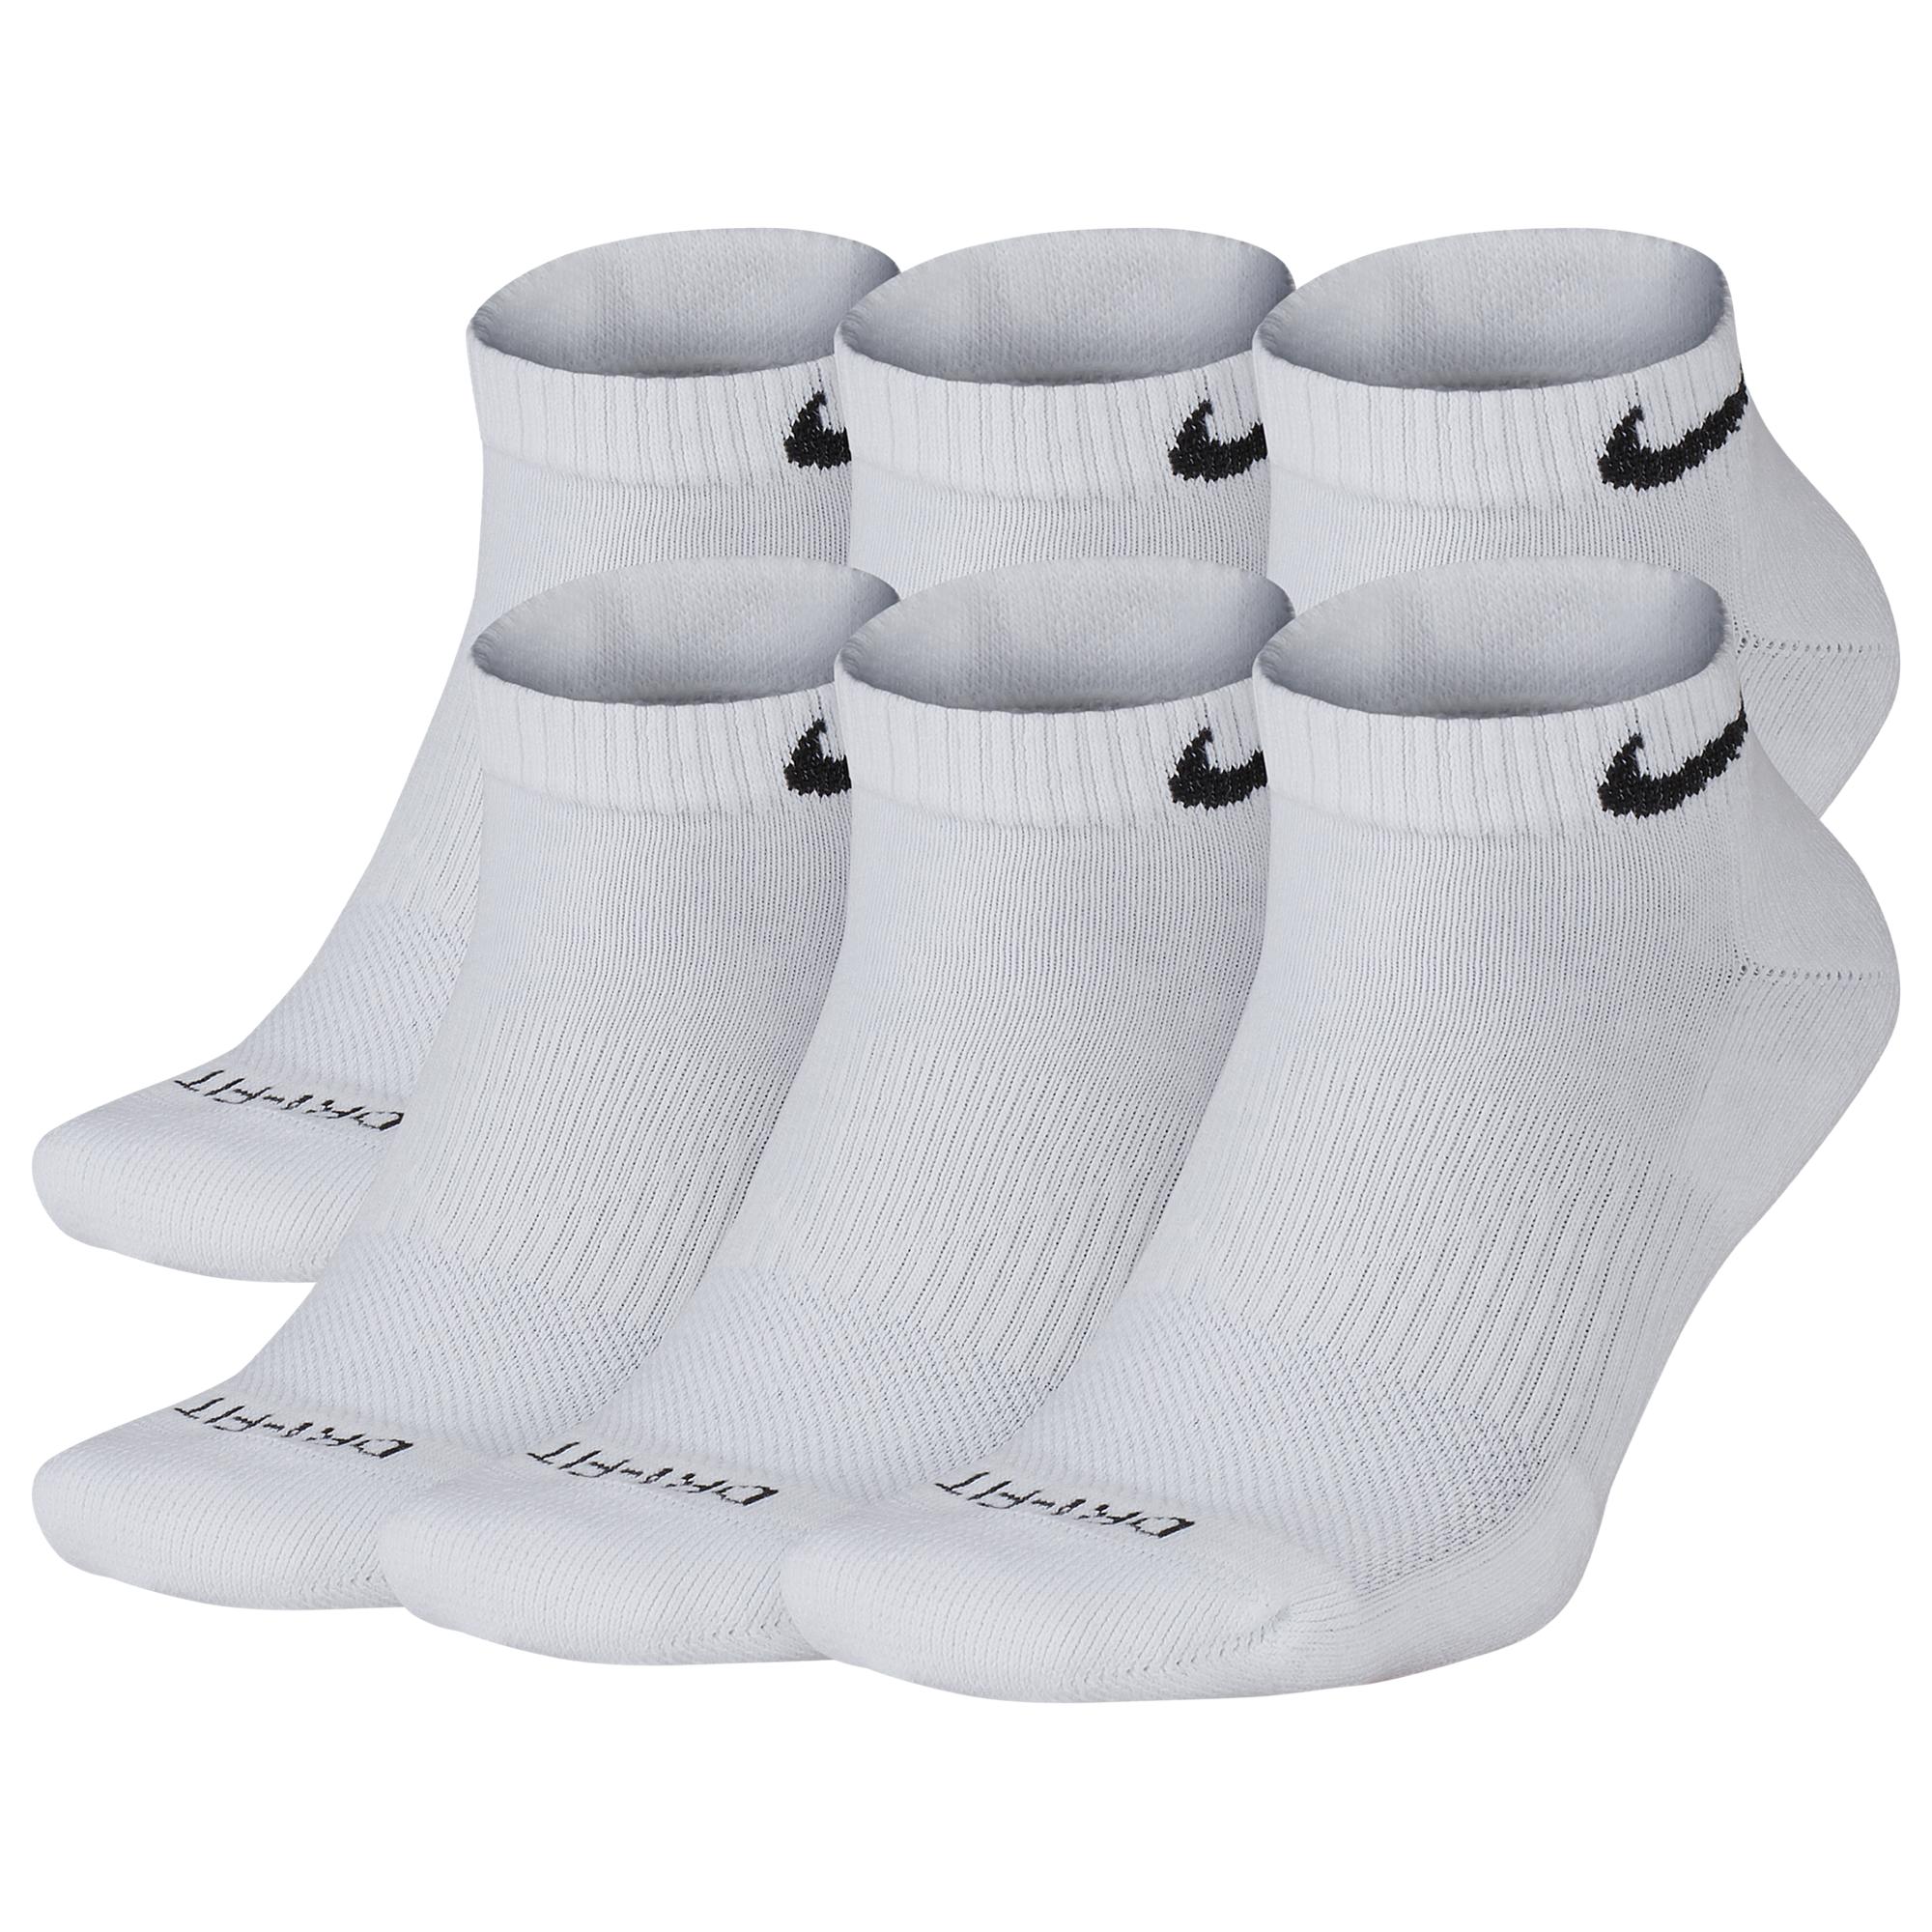 Nike Dri-fit Everyday Plus Cushion Training Low Socks 6 Pack in White ...